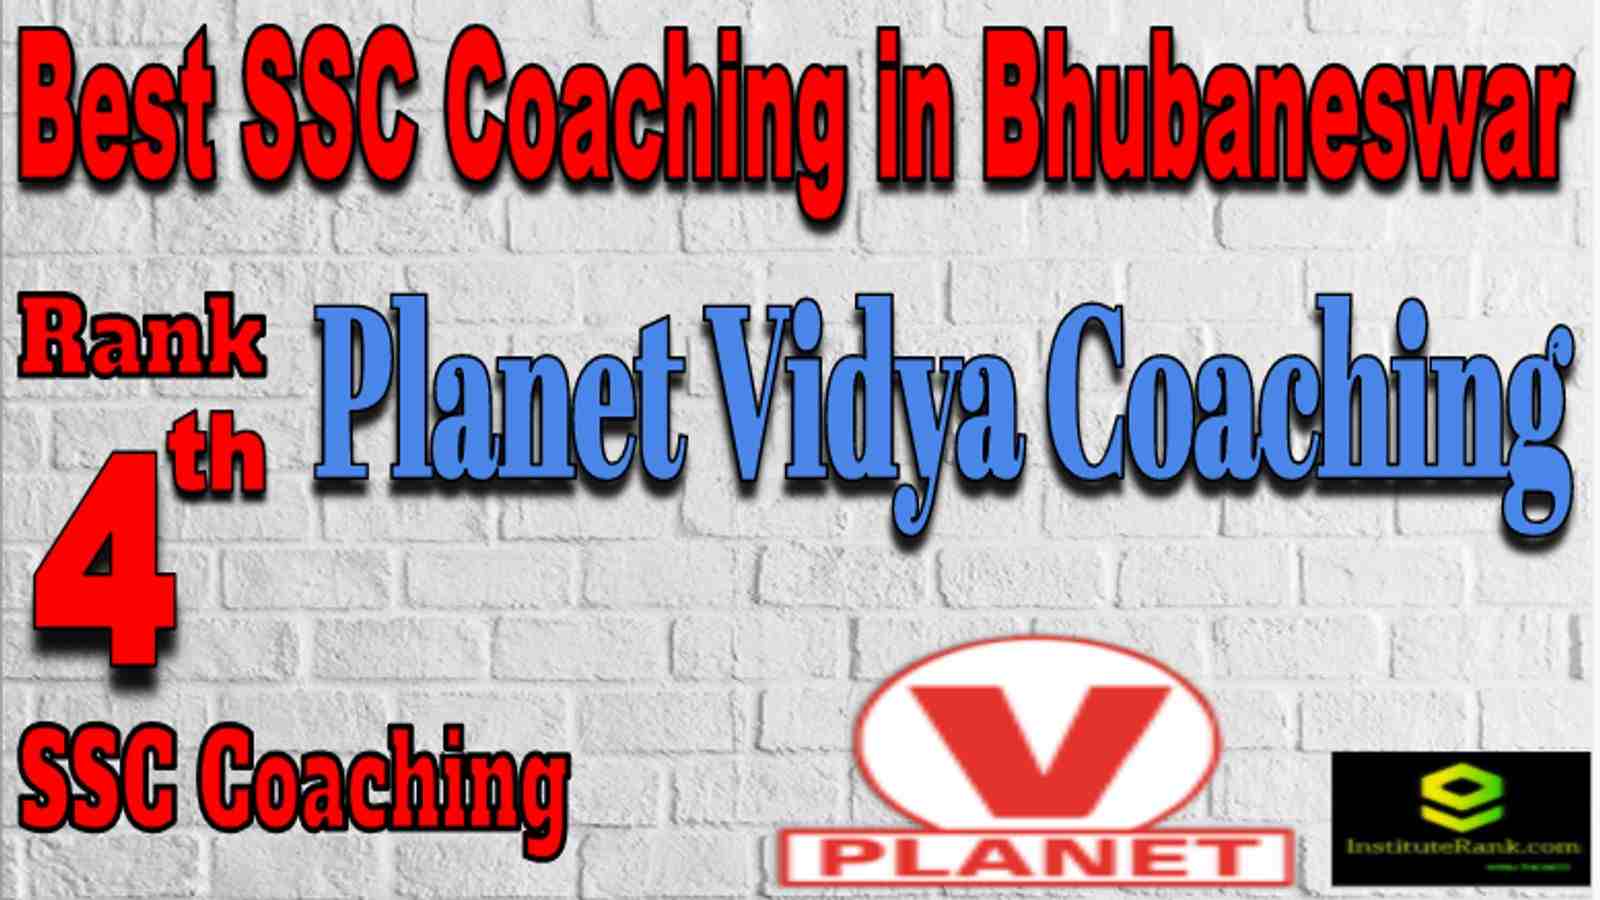 Rank 4 Best SSC Coaching in Bhubaneswar